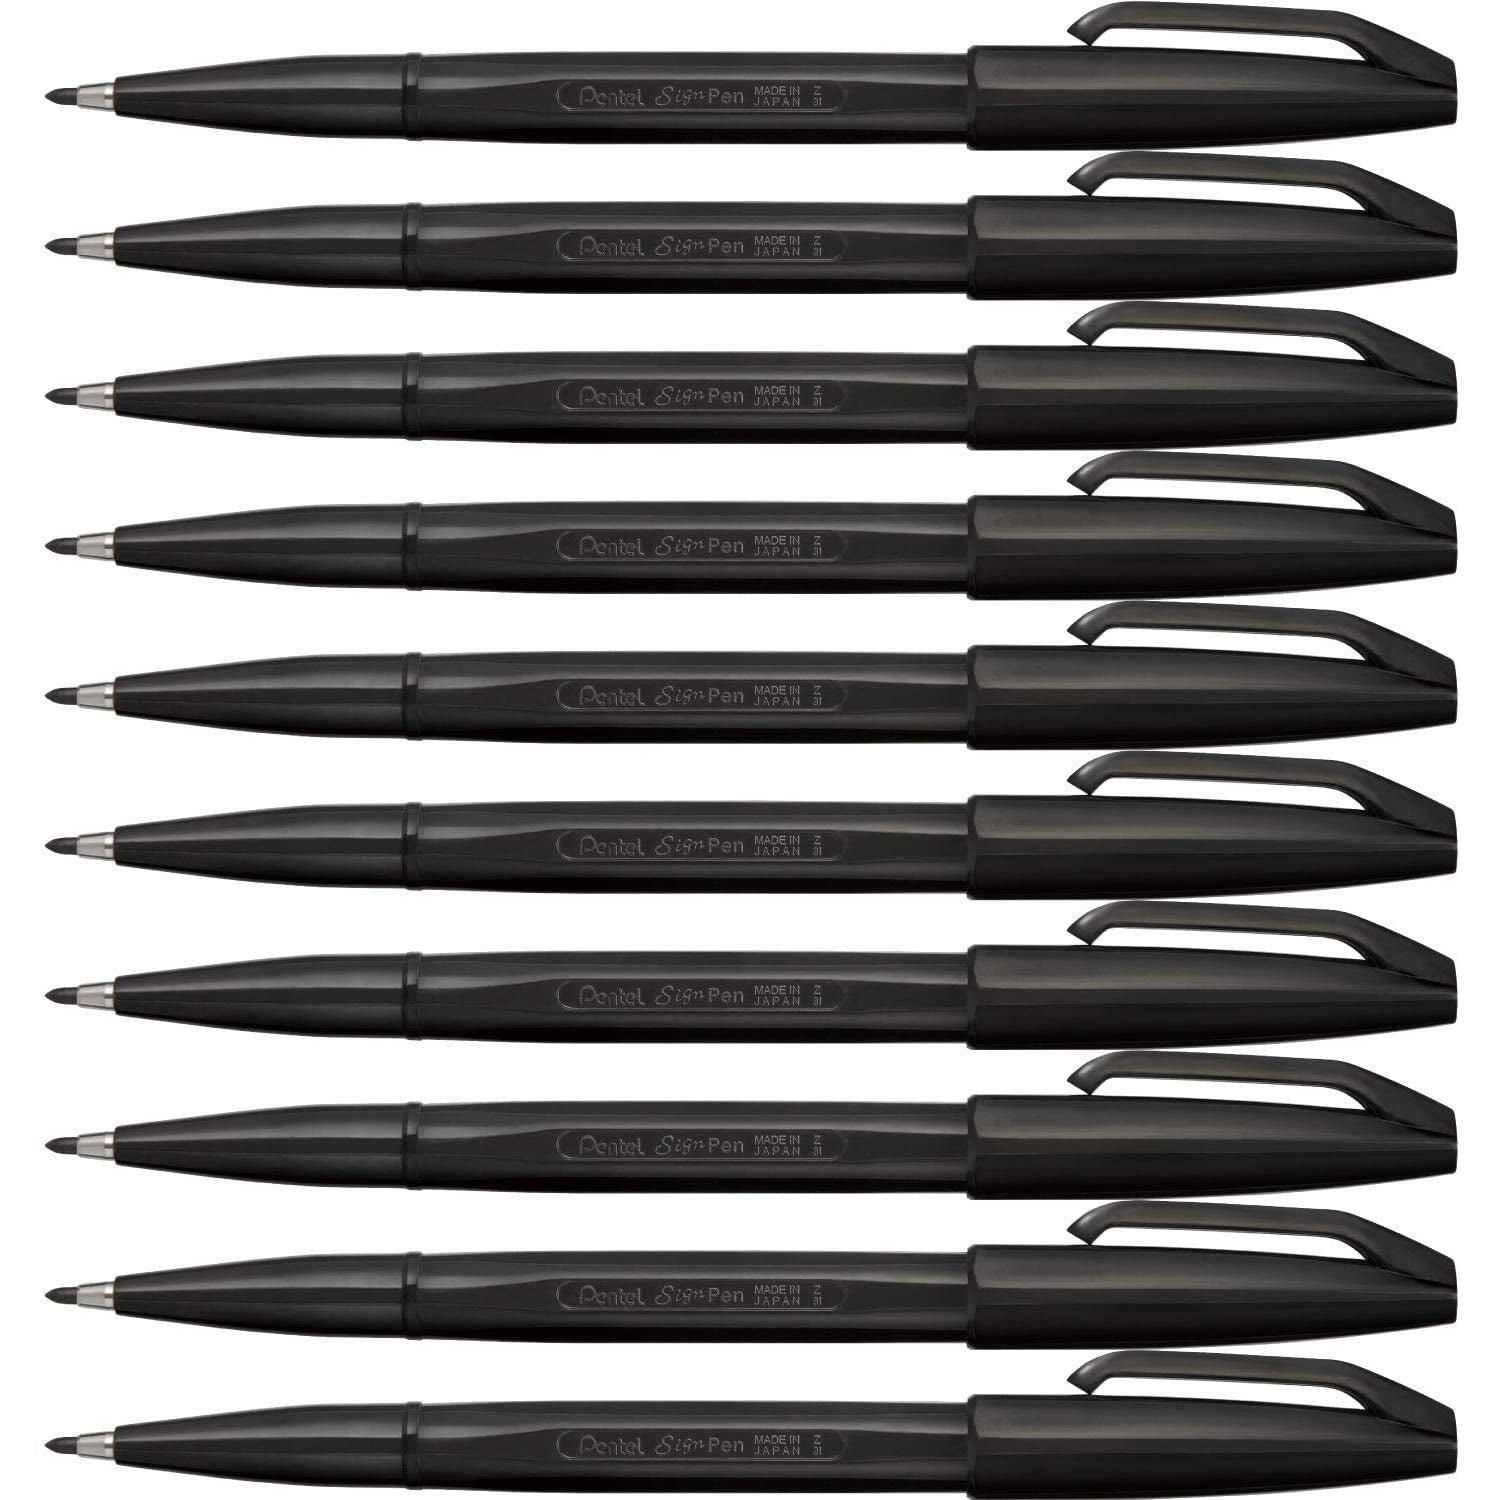 Pentel Felt-Tip Pen Black Color